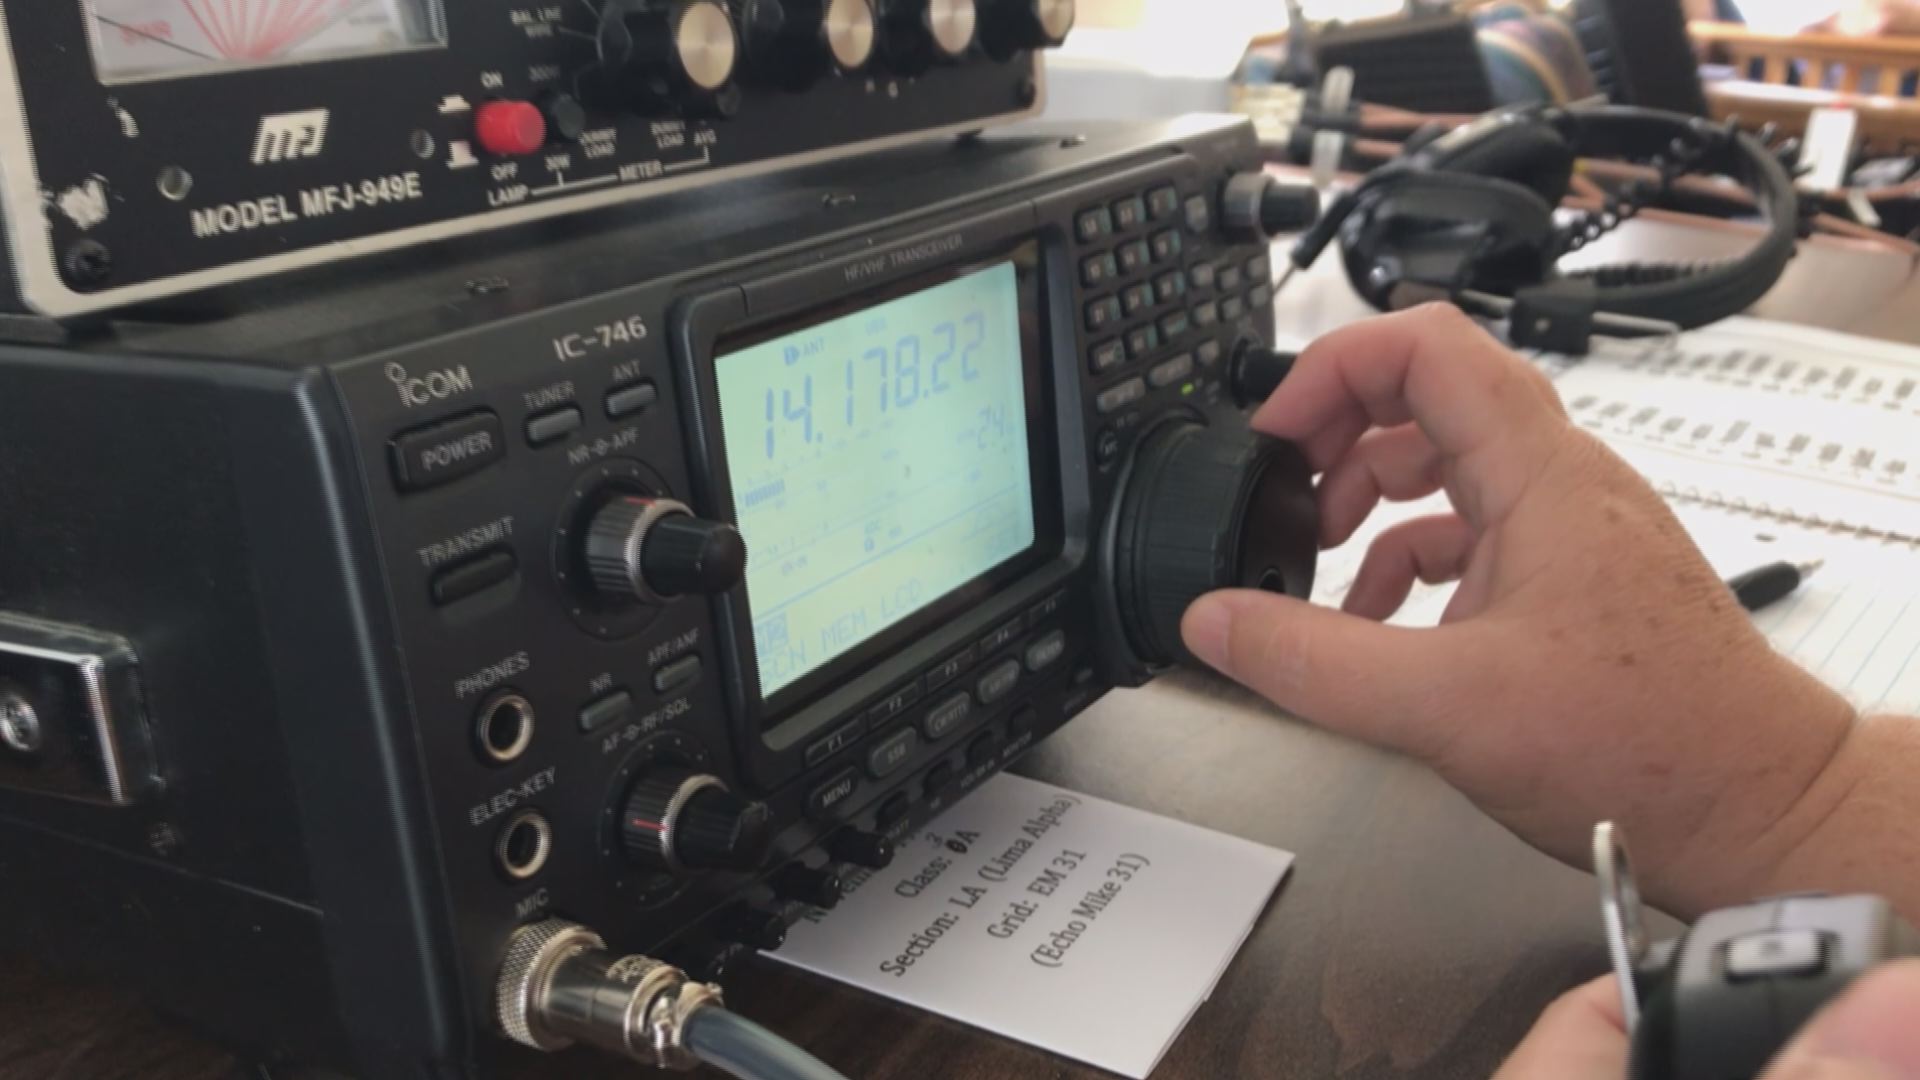 Amateur radio operators brush up on disaster scenarios in Central Louisiana hq photo